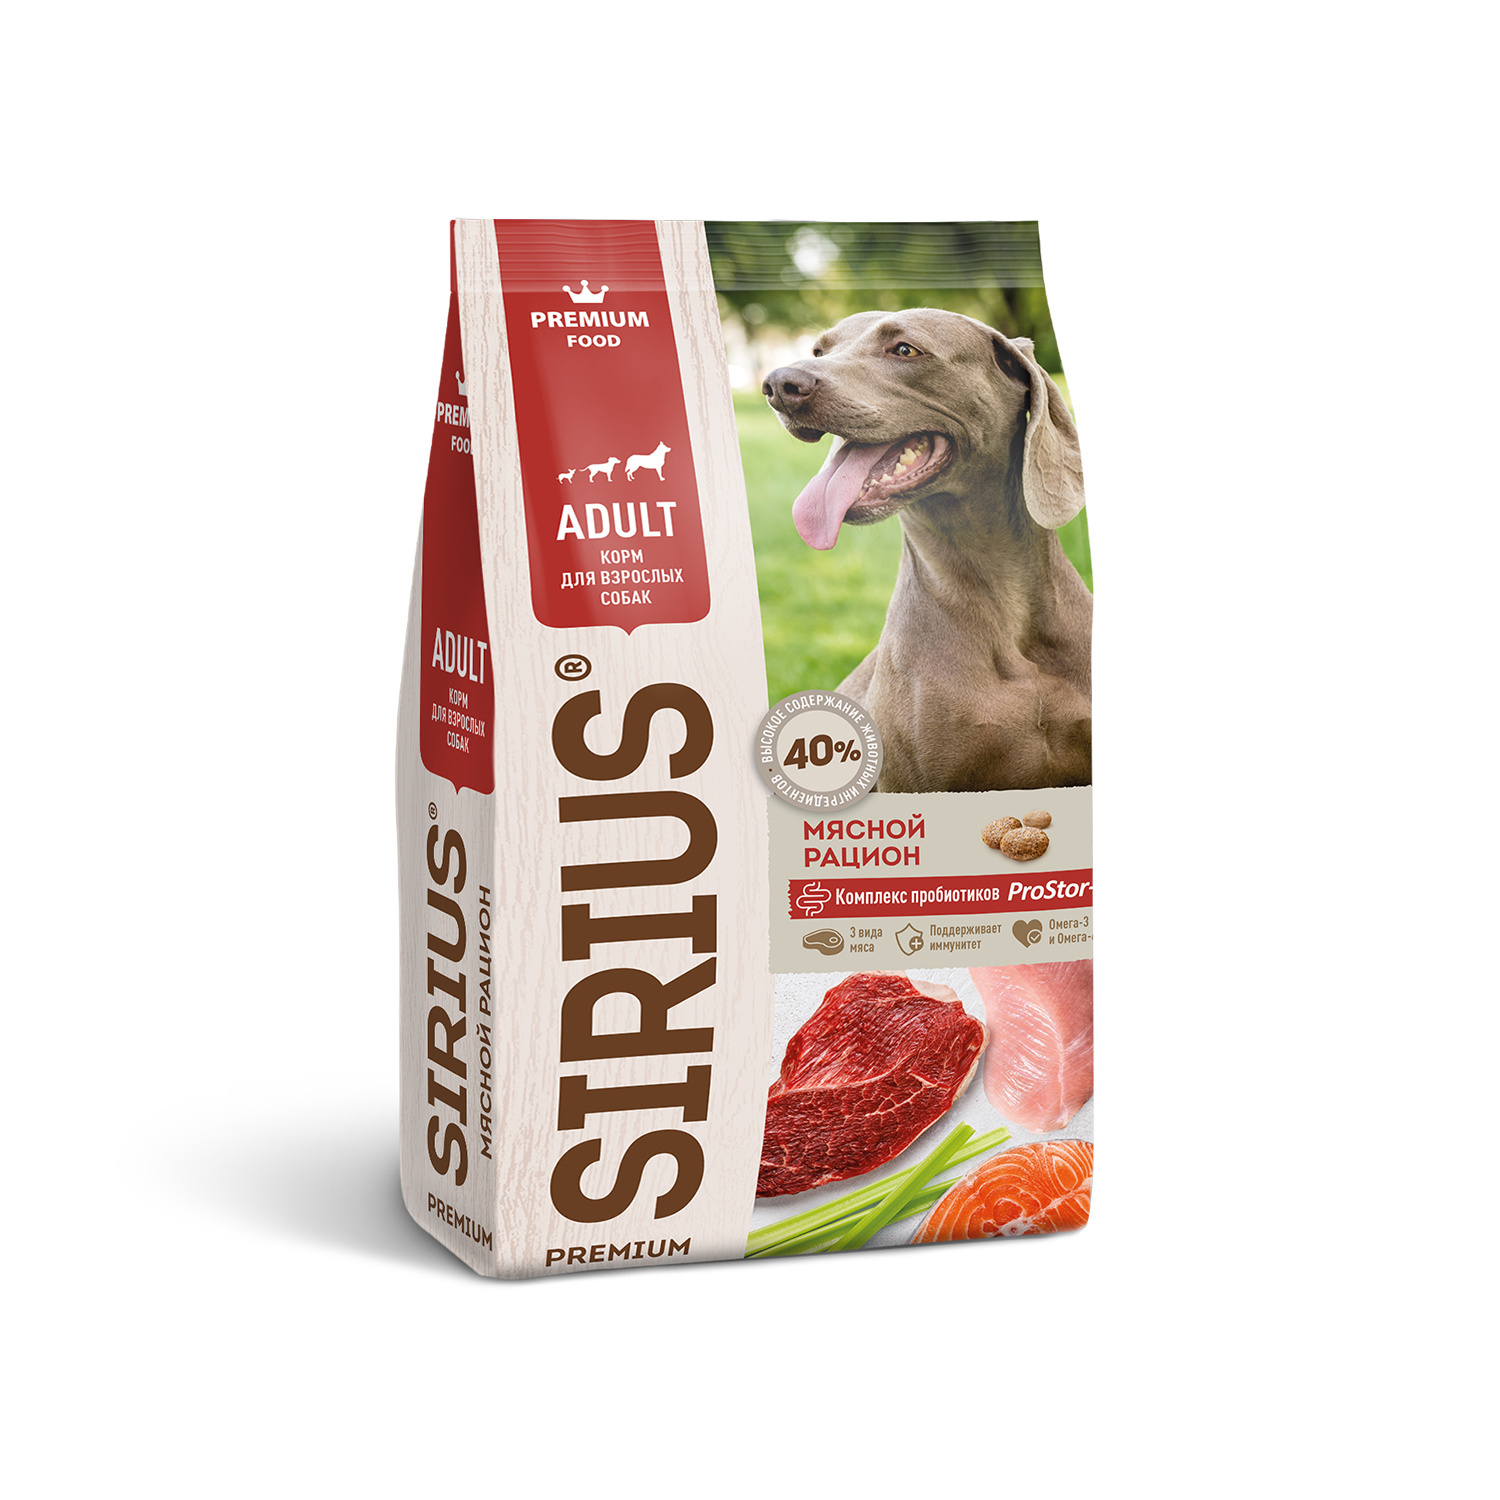 Sirius Sirius сухой корм для собак, мясной рацион (2 кг) sirius sirius сухой корм для собак говядина с овощами 2 кг